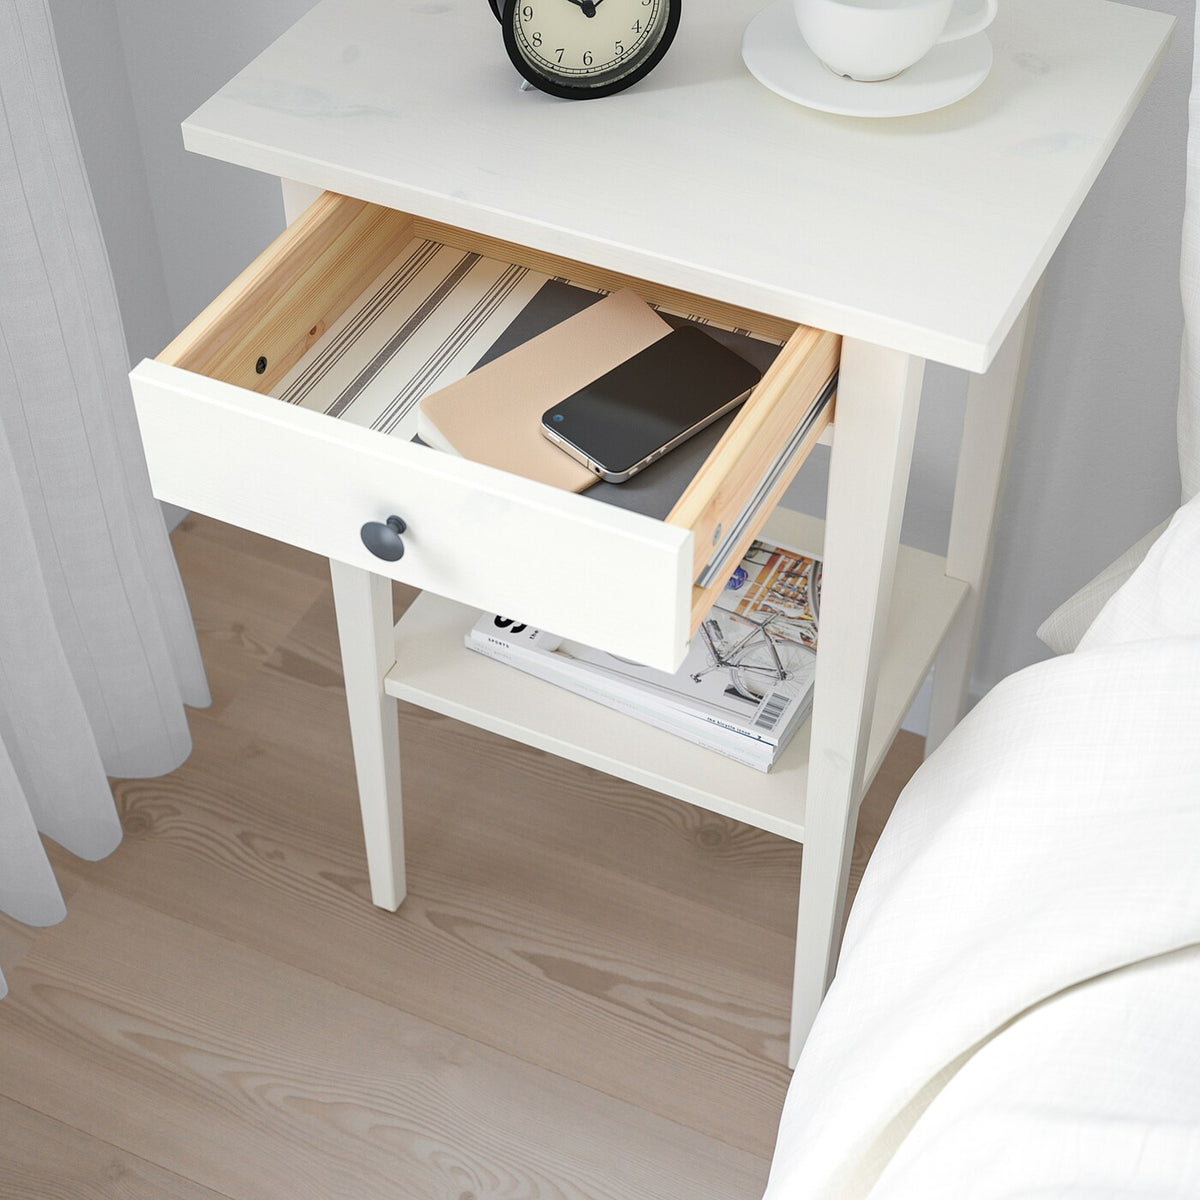 IKEA HEMNES bedside table, white stain, 46x35 cm